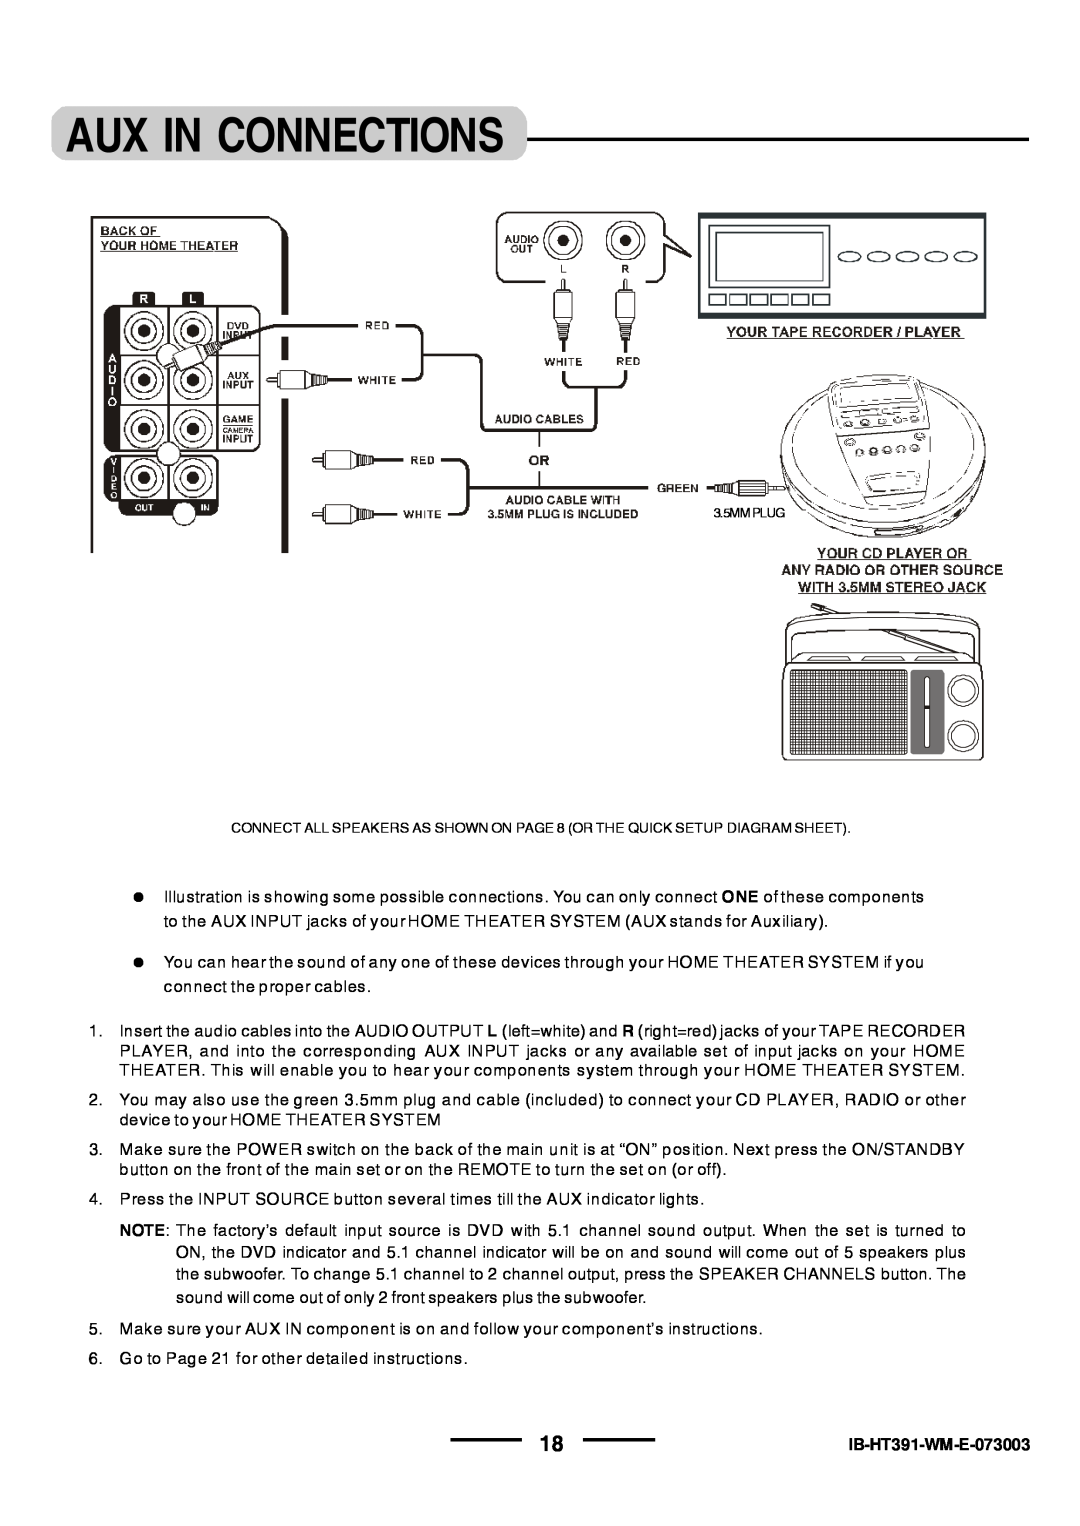 Lenoxx Electronics HT-391 manual Aux In Connections, IB-HT391-WM-E-073003 